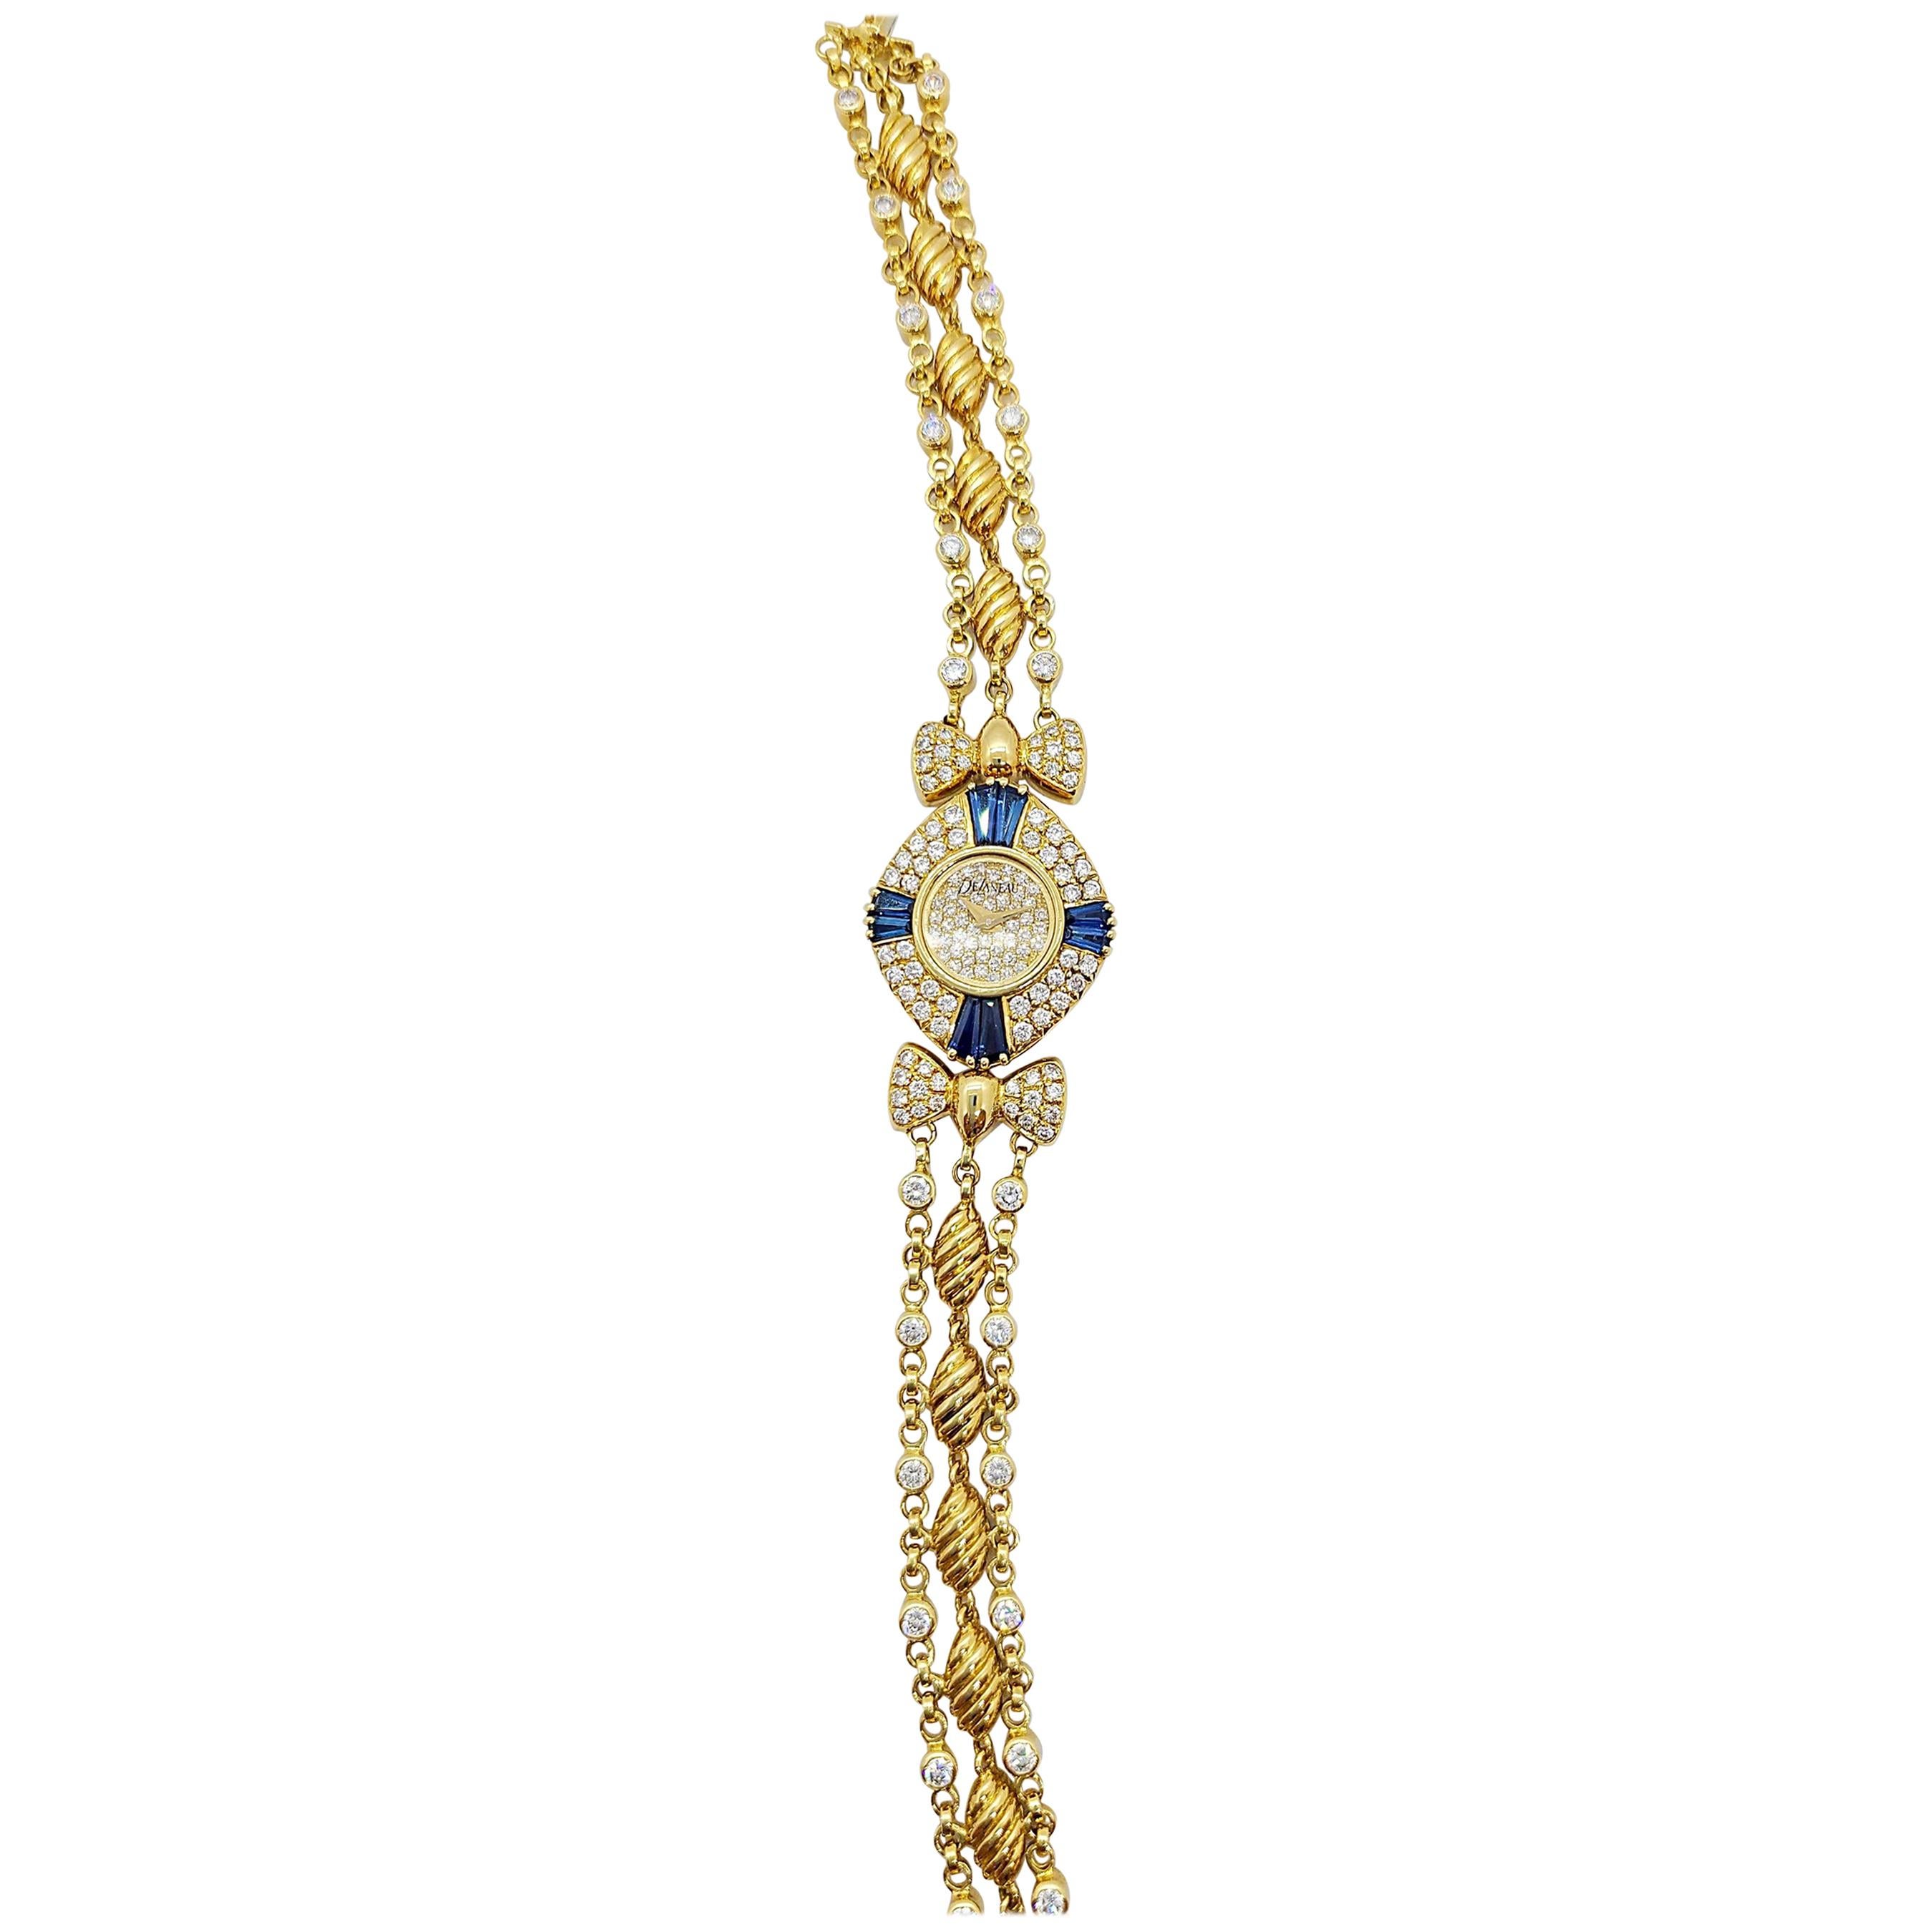 DeLaneau 18 Karat Yellow Gold Diamond and Blue Sapphire Bracelet Watch